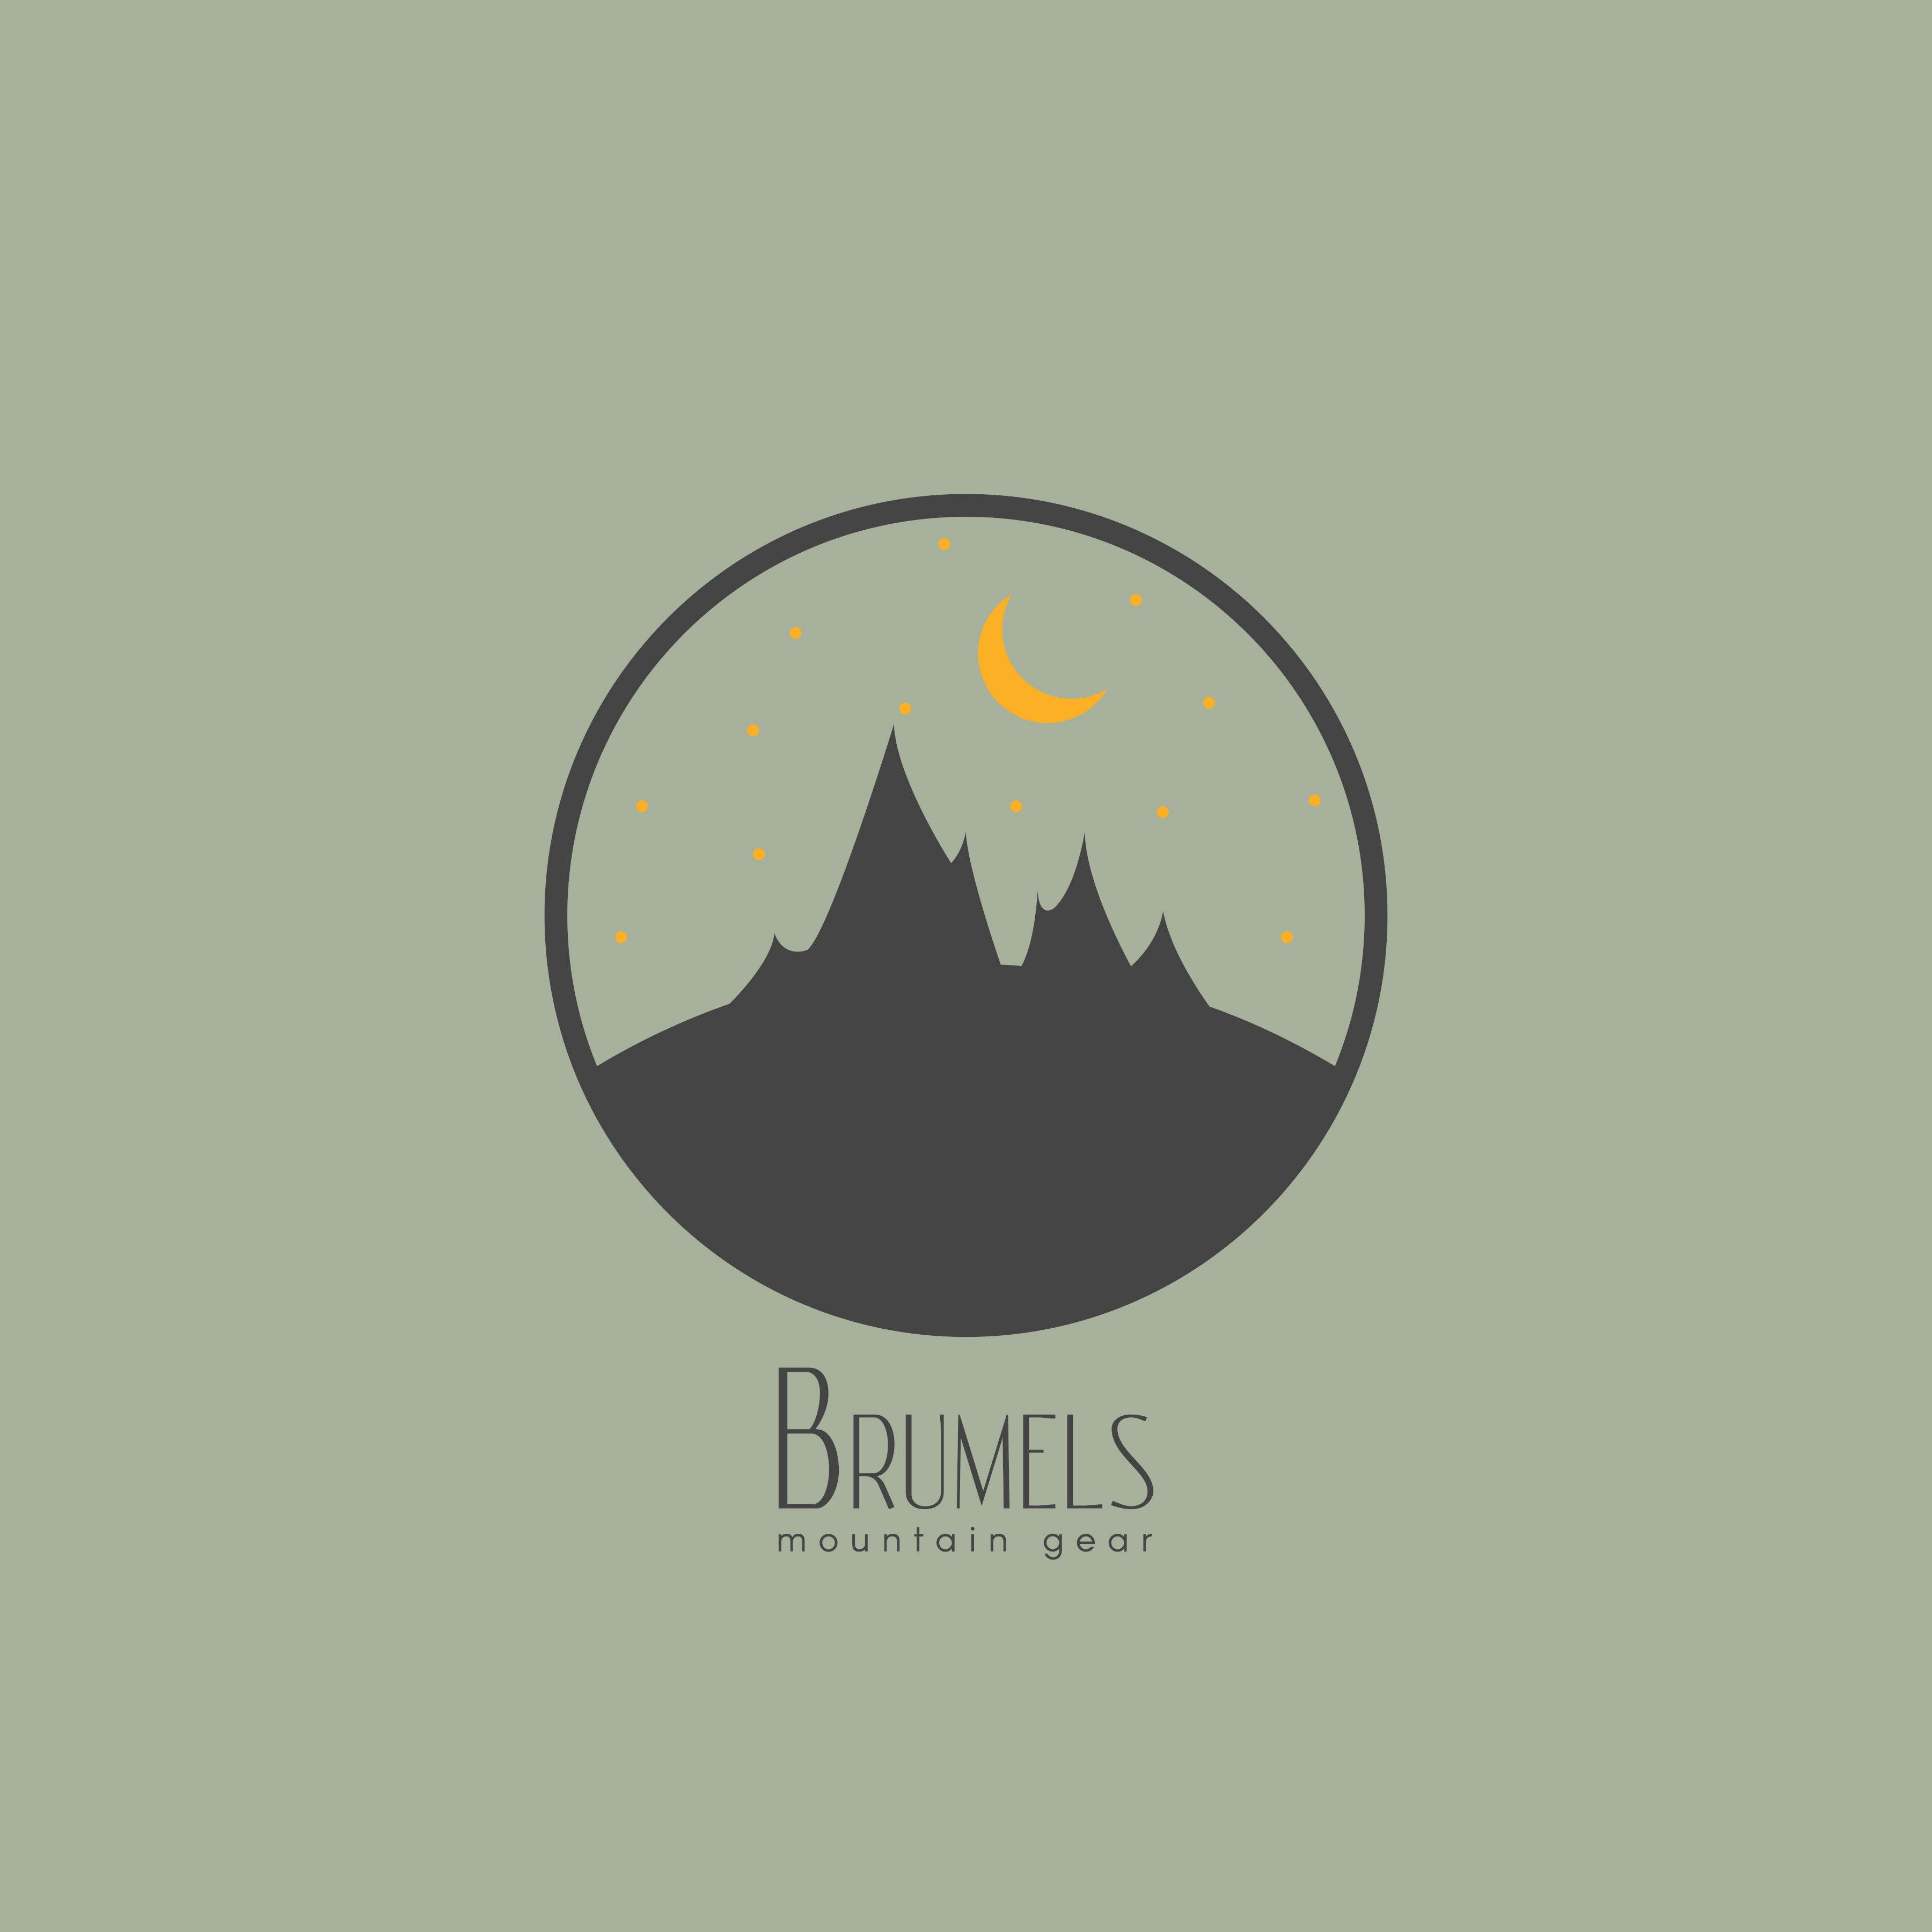 Stars in Yellow Circle Logo - Brumels mountain gear, mountain, circle, logo, hiking, moon, stars